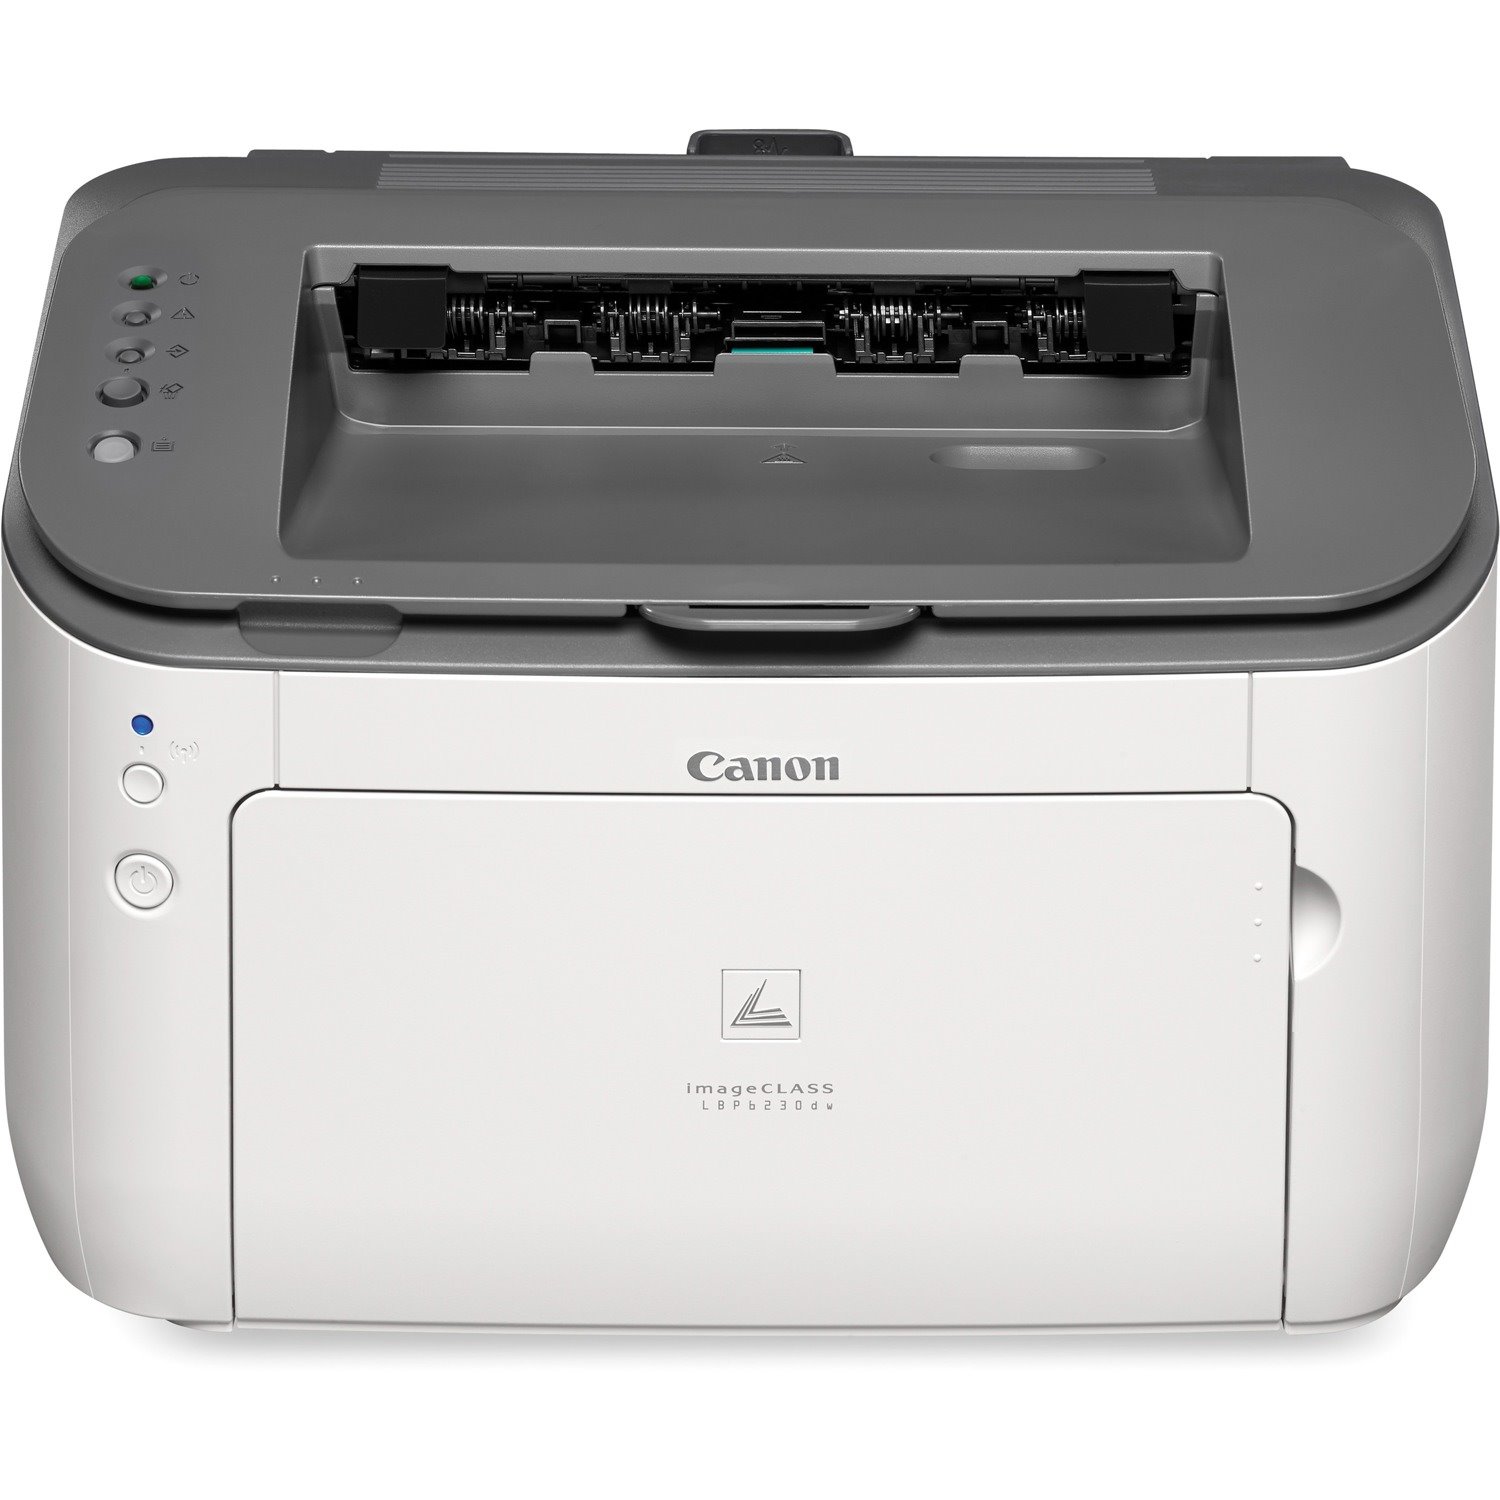 Canon imageCLASS LBP LBP6230dw Desktop Wireless Laser Printer - Monochrome